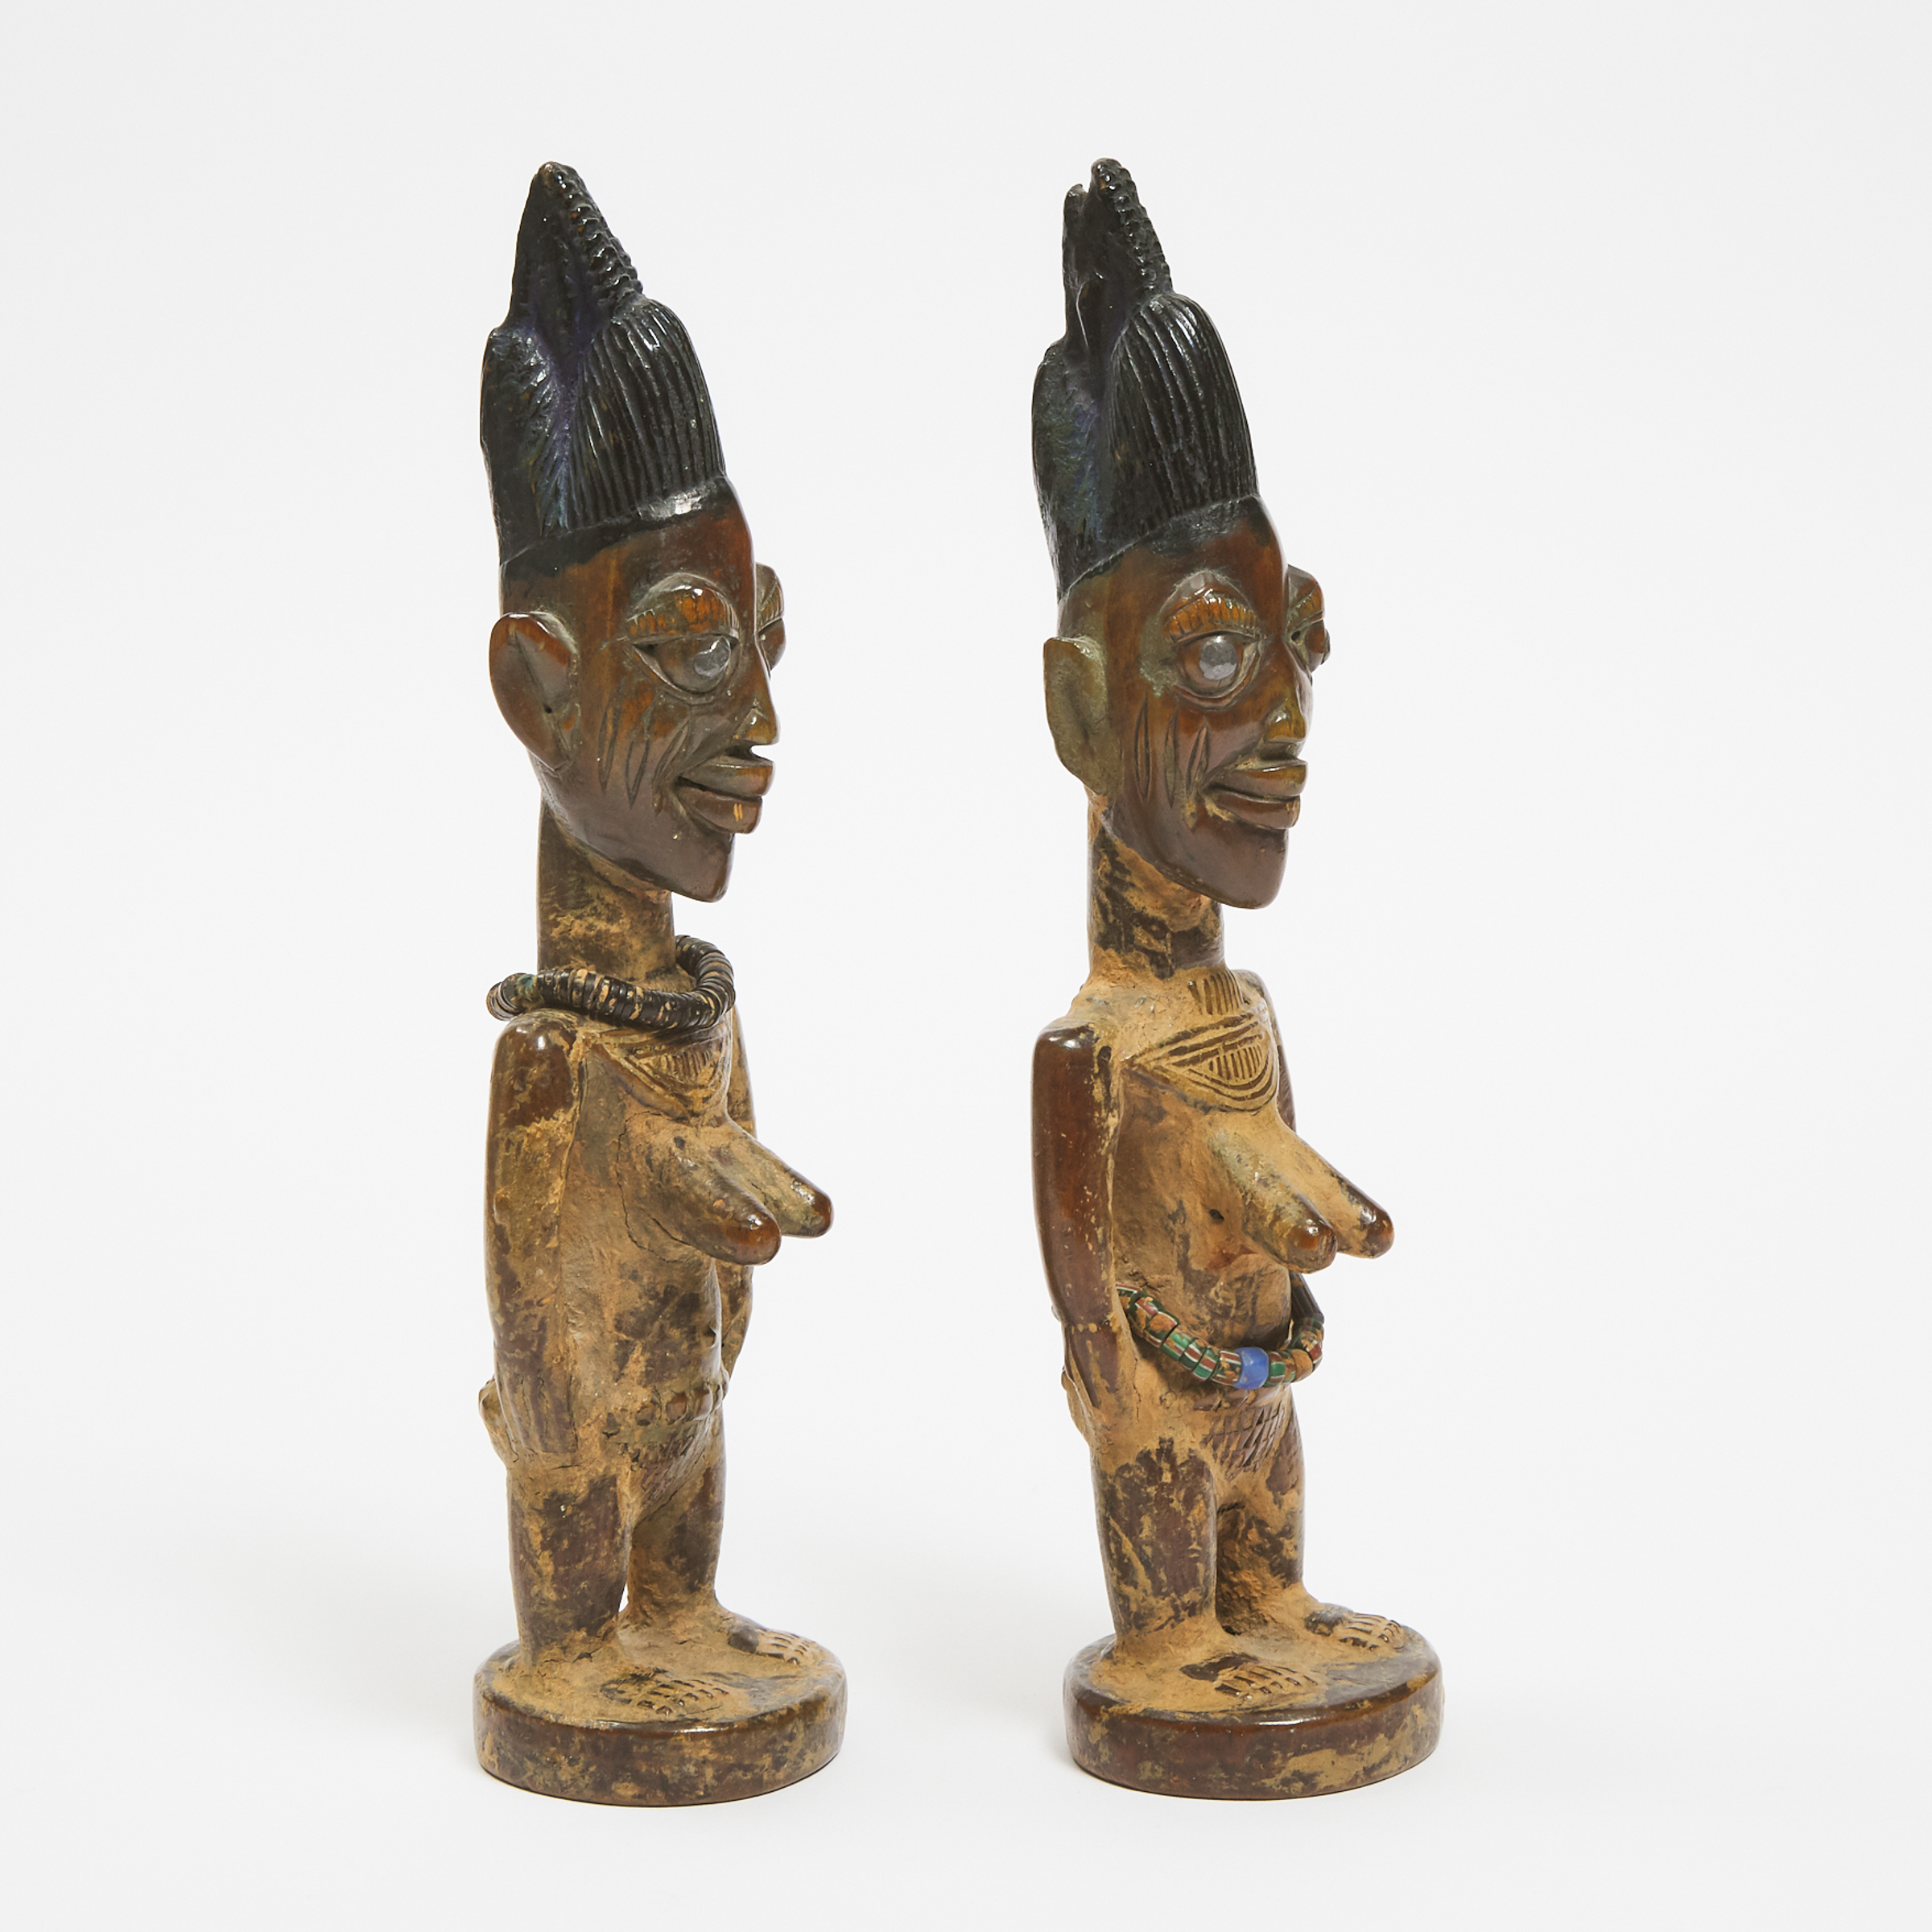 Pair of Yoruba Female Ibeji Twin Figures, Ila Orangun Region, Nigeria, West Africa, early to mid 20th century